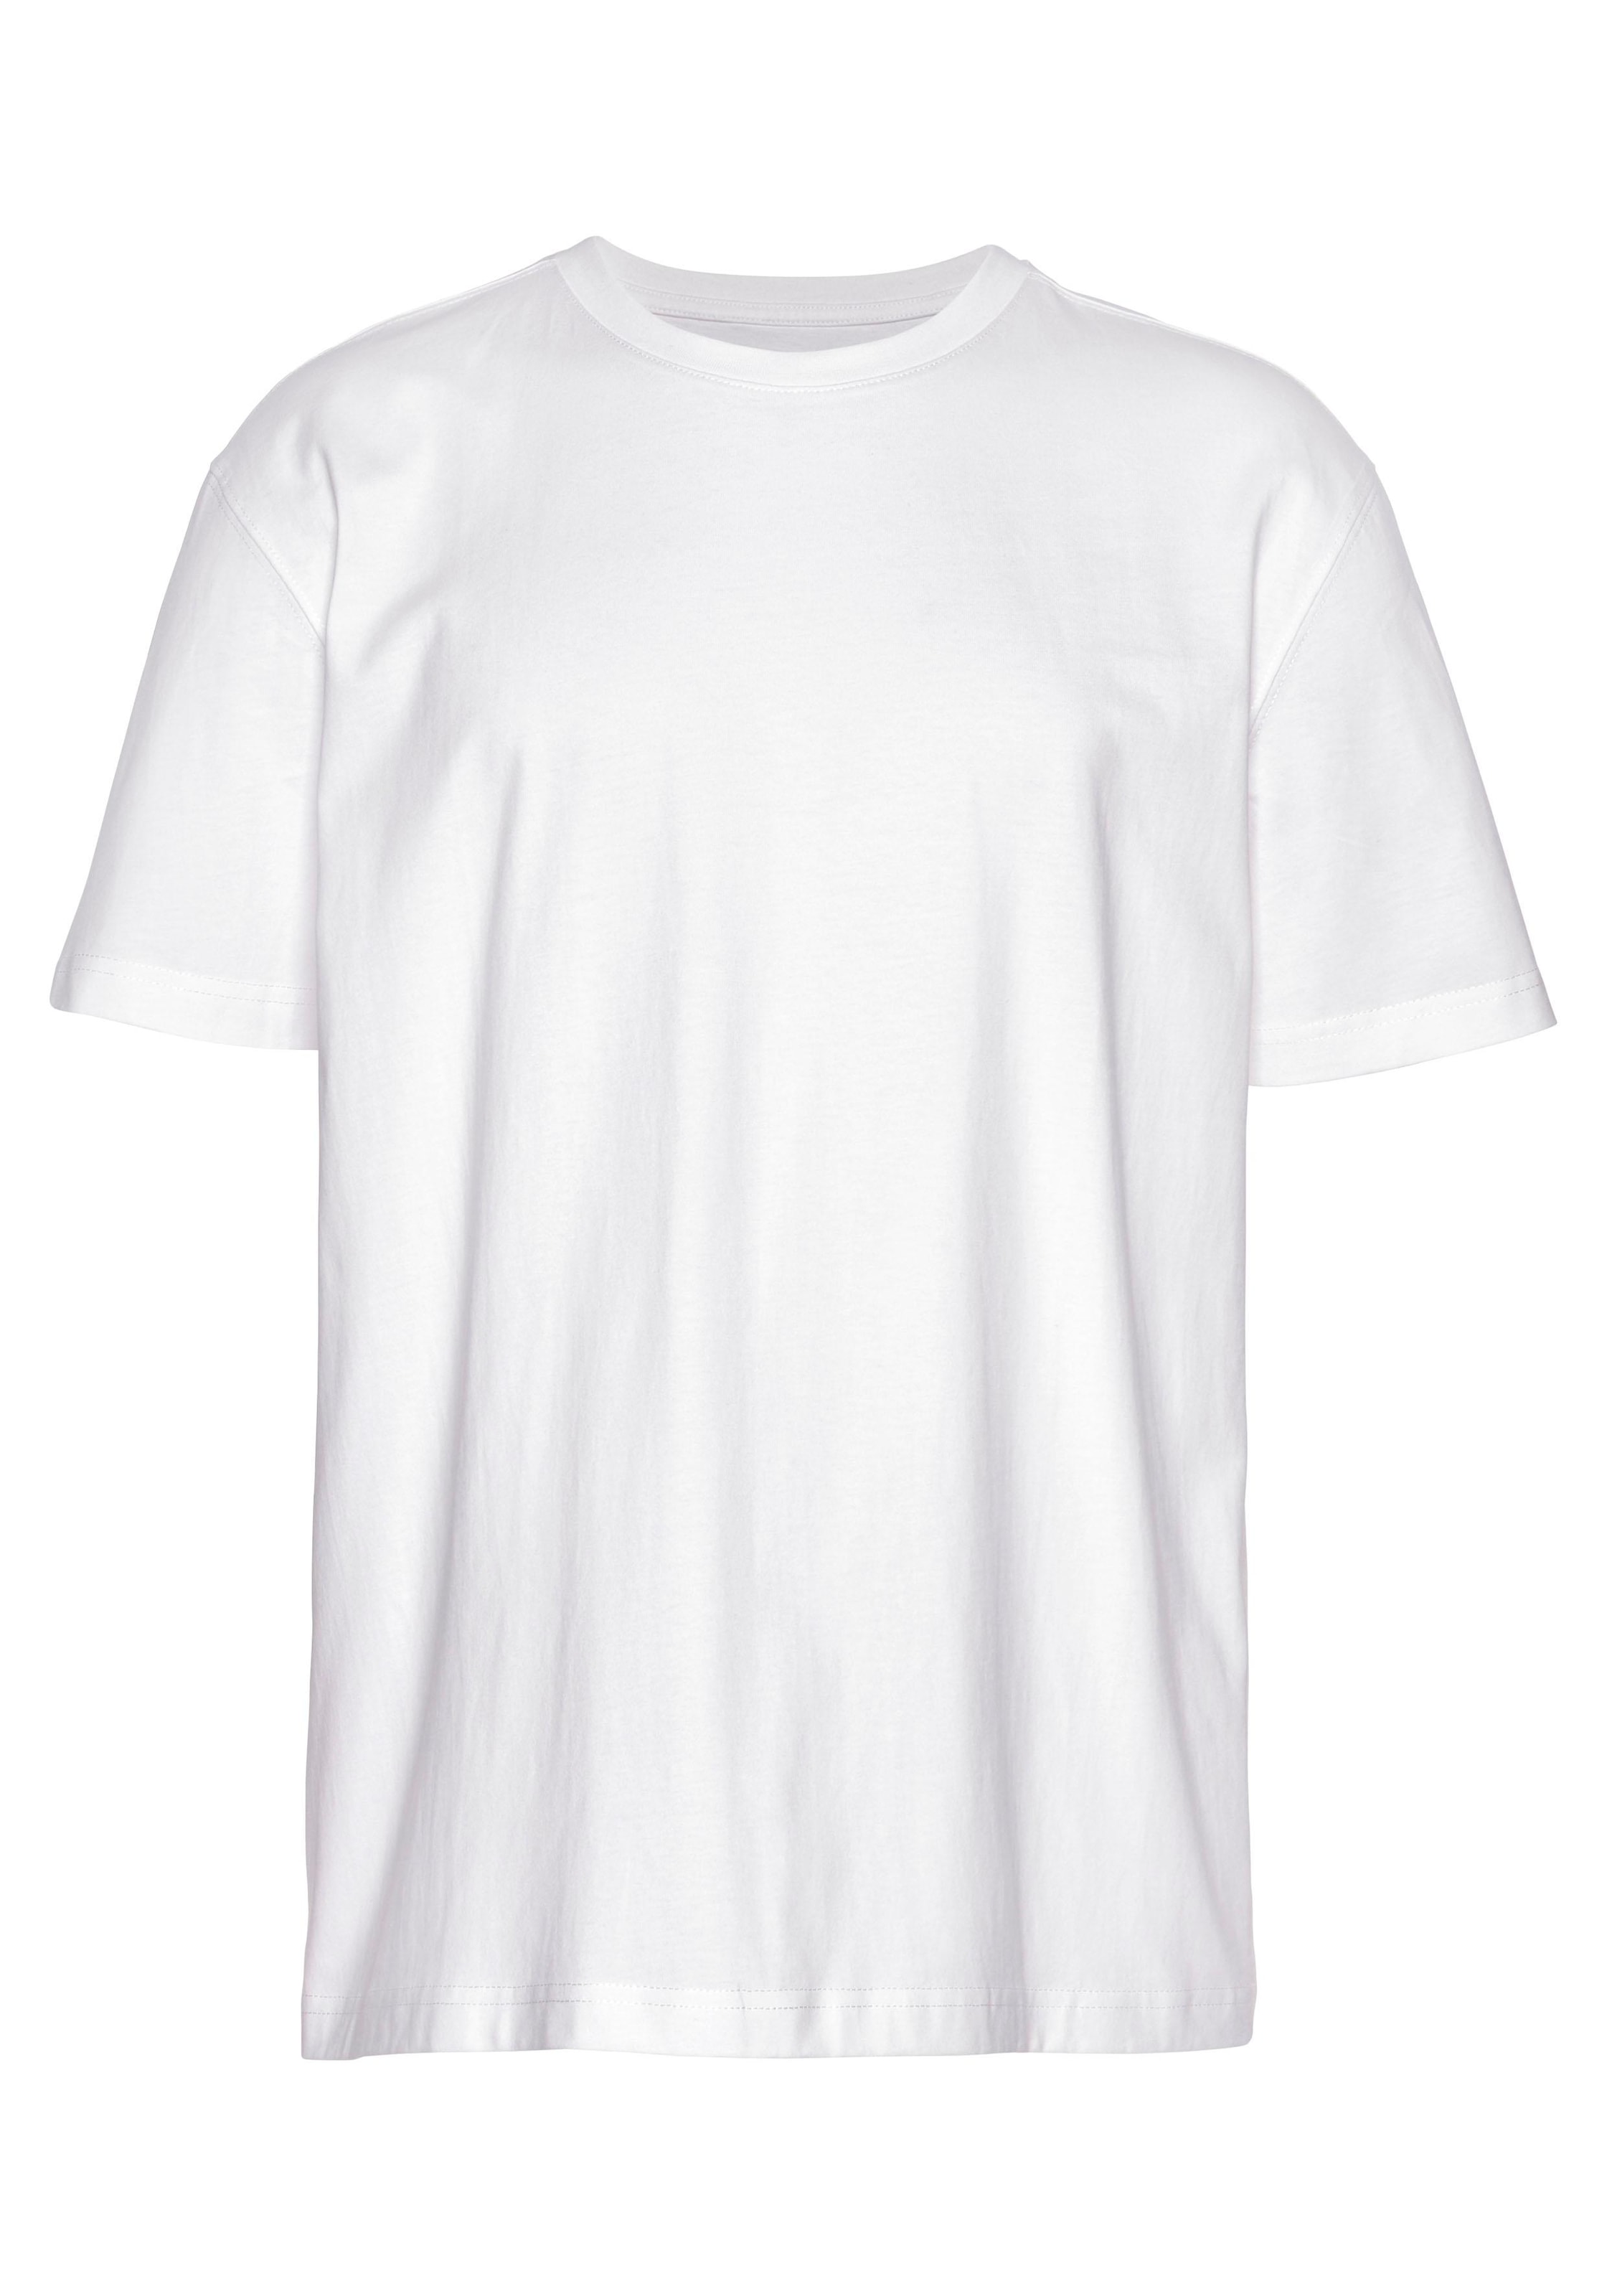 Man's World Rundhalsshirt, perfekt als Unterzieh- T-shirt